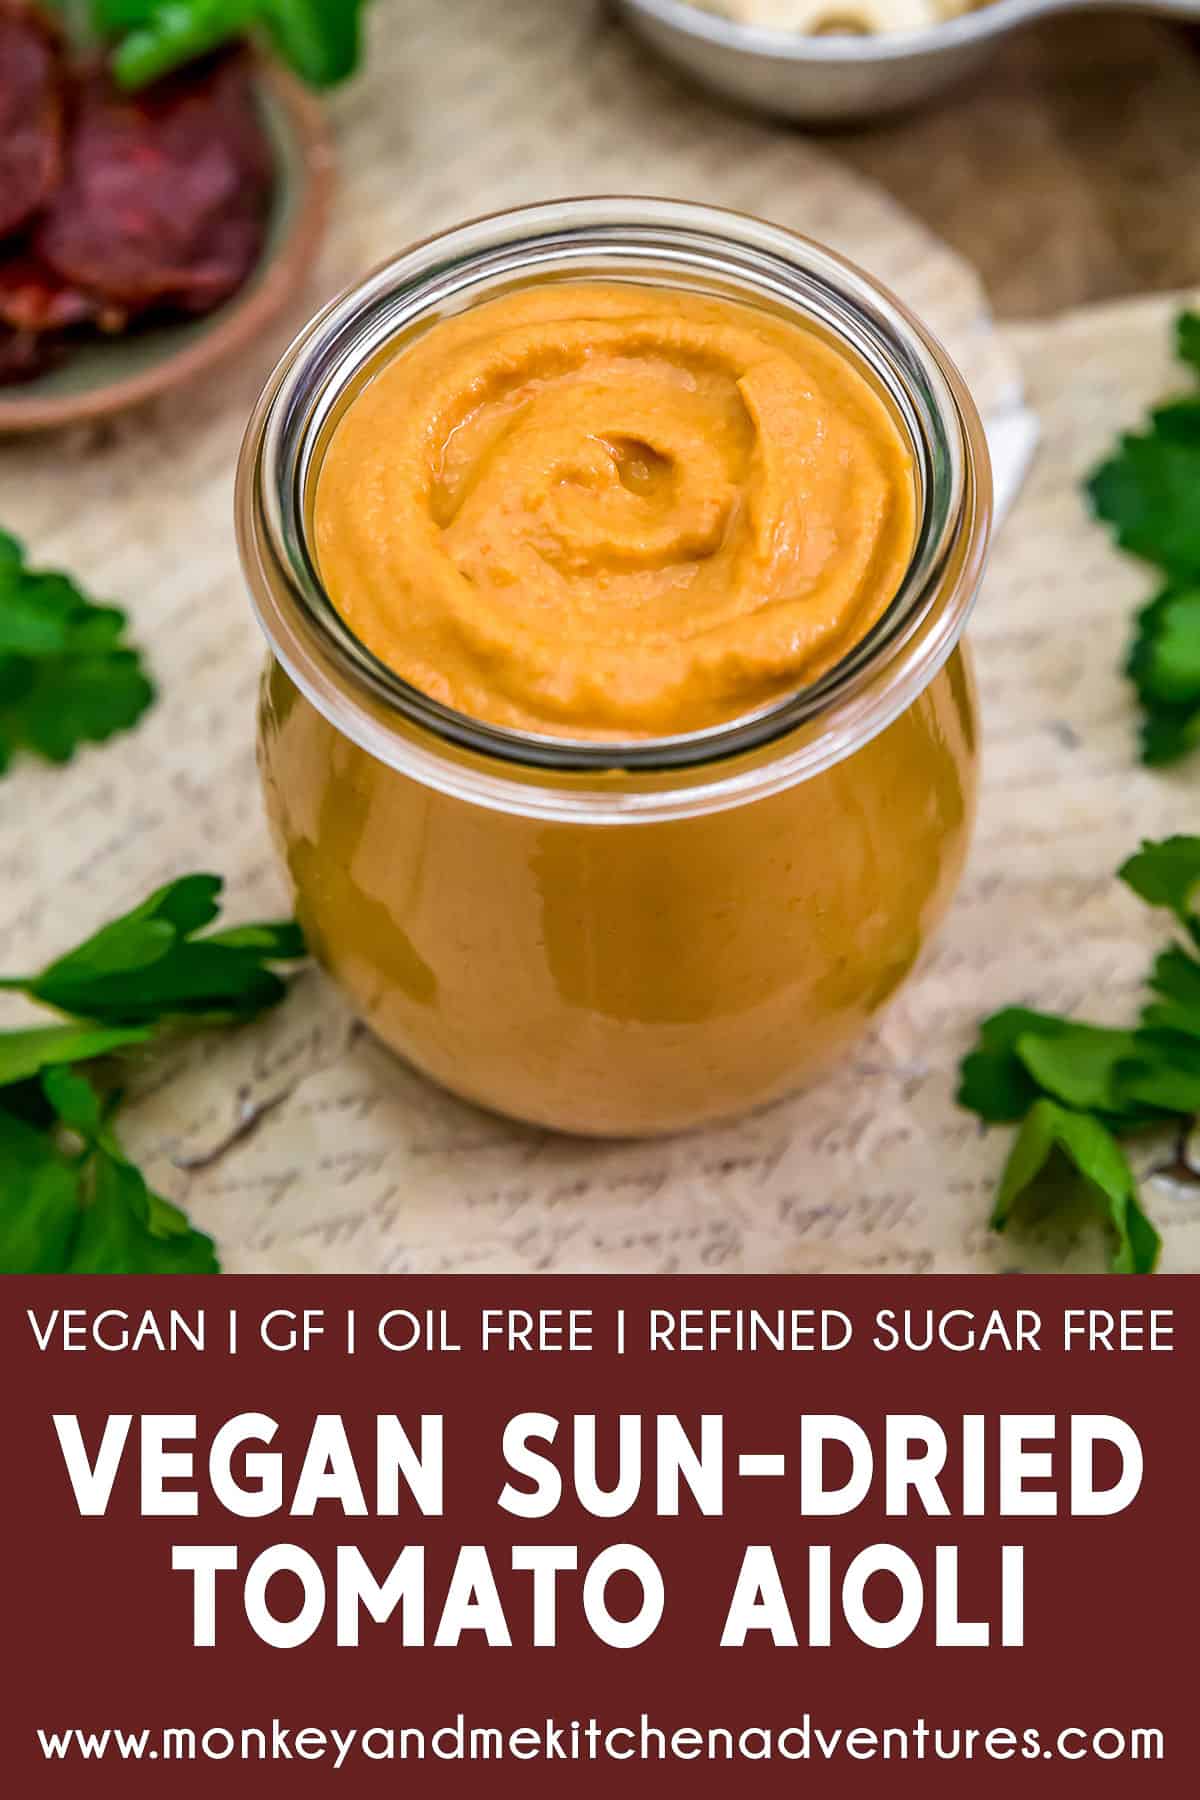 Oil Free Vegan Sun-Dried Tomato Aioli with text description